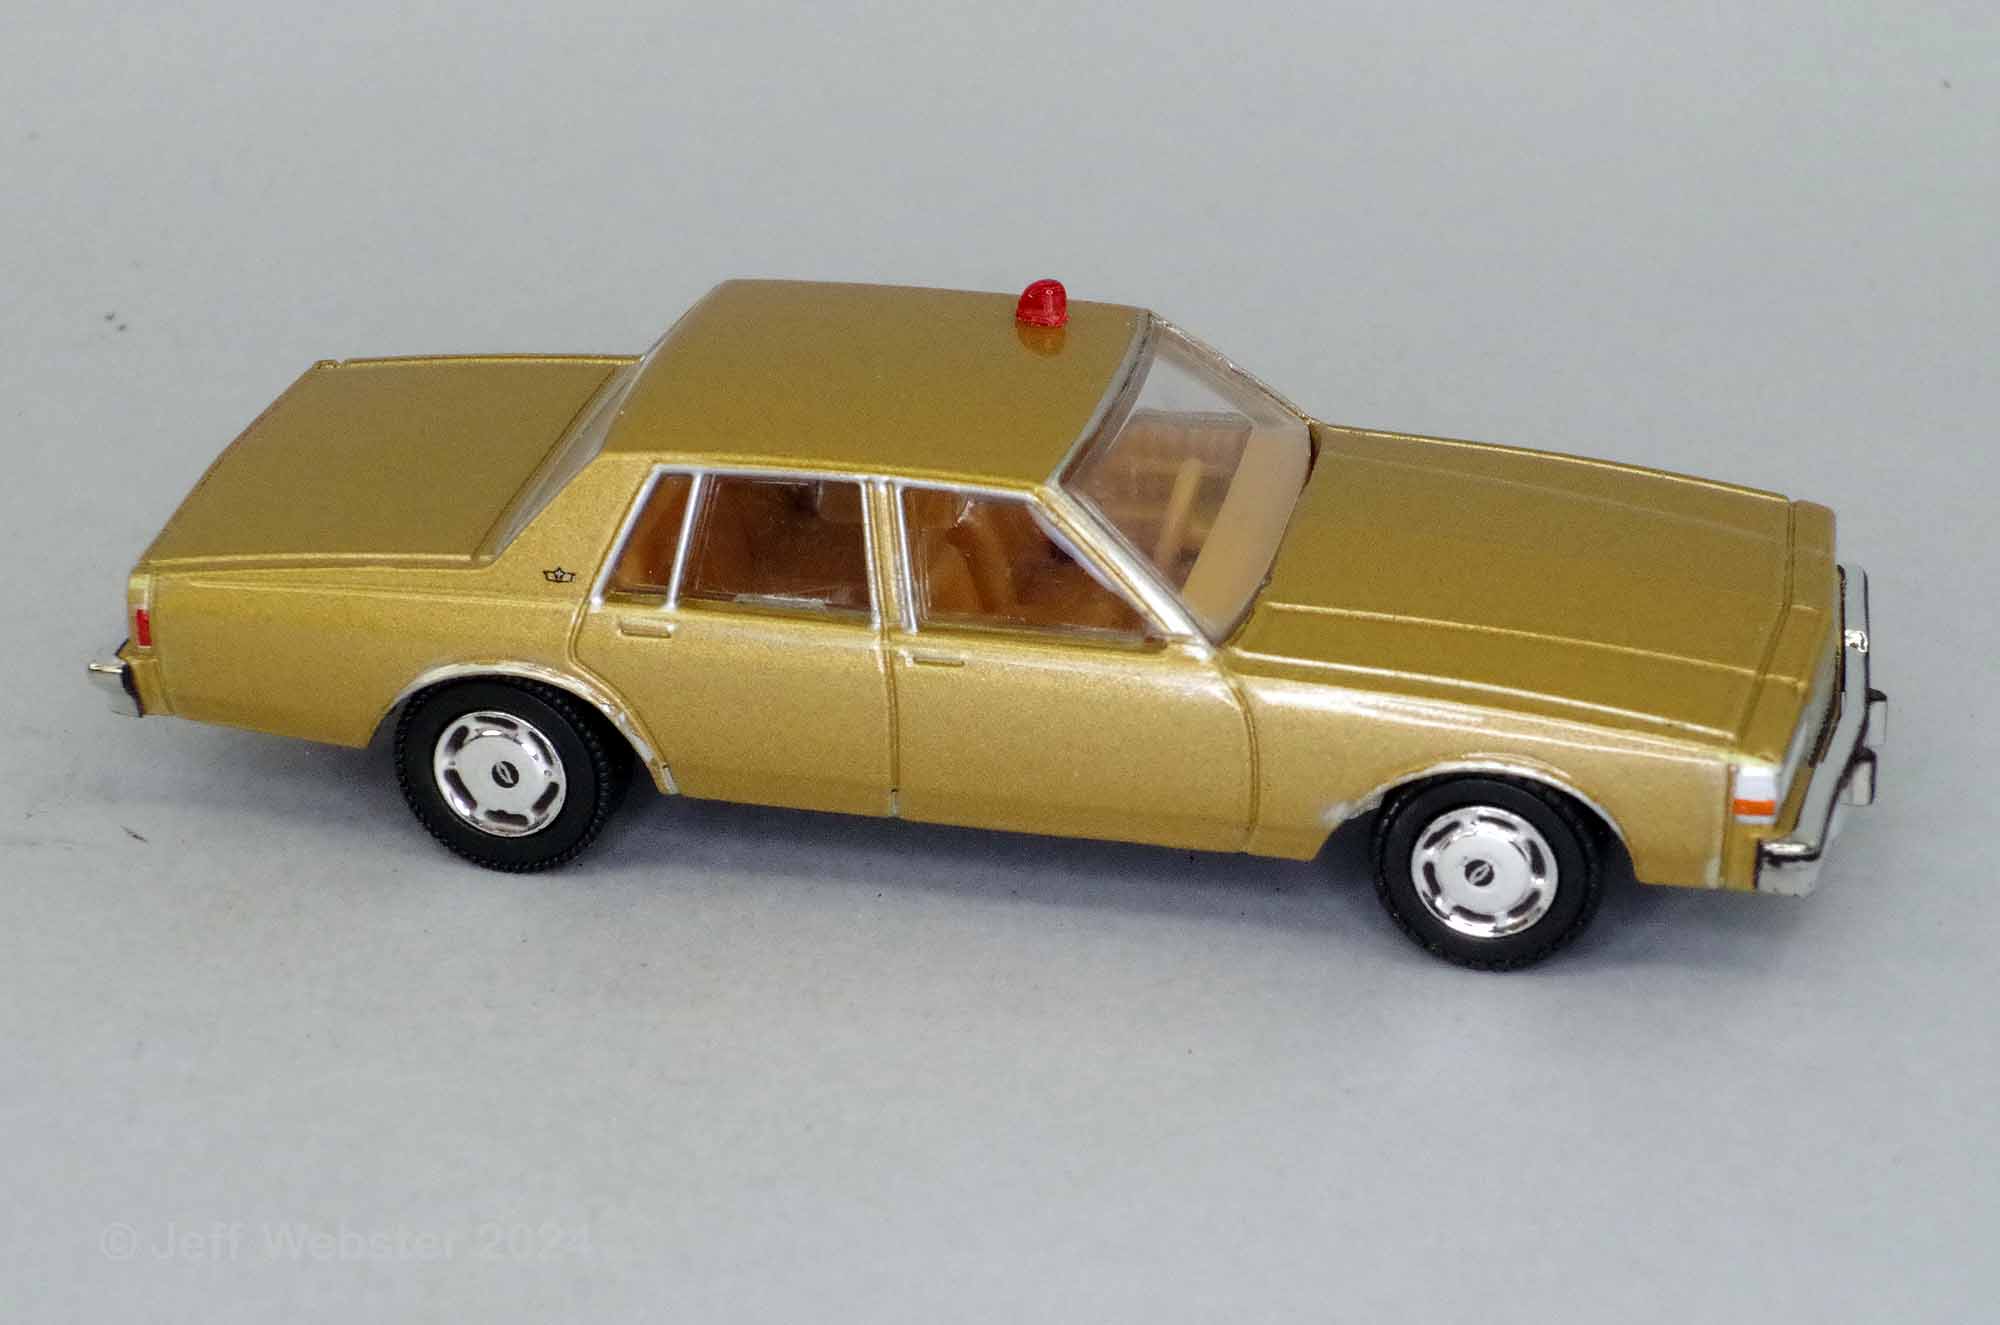 Chevy Caprice gold light_6.jpg